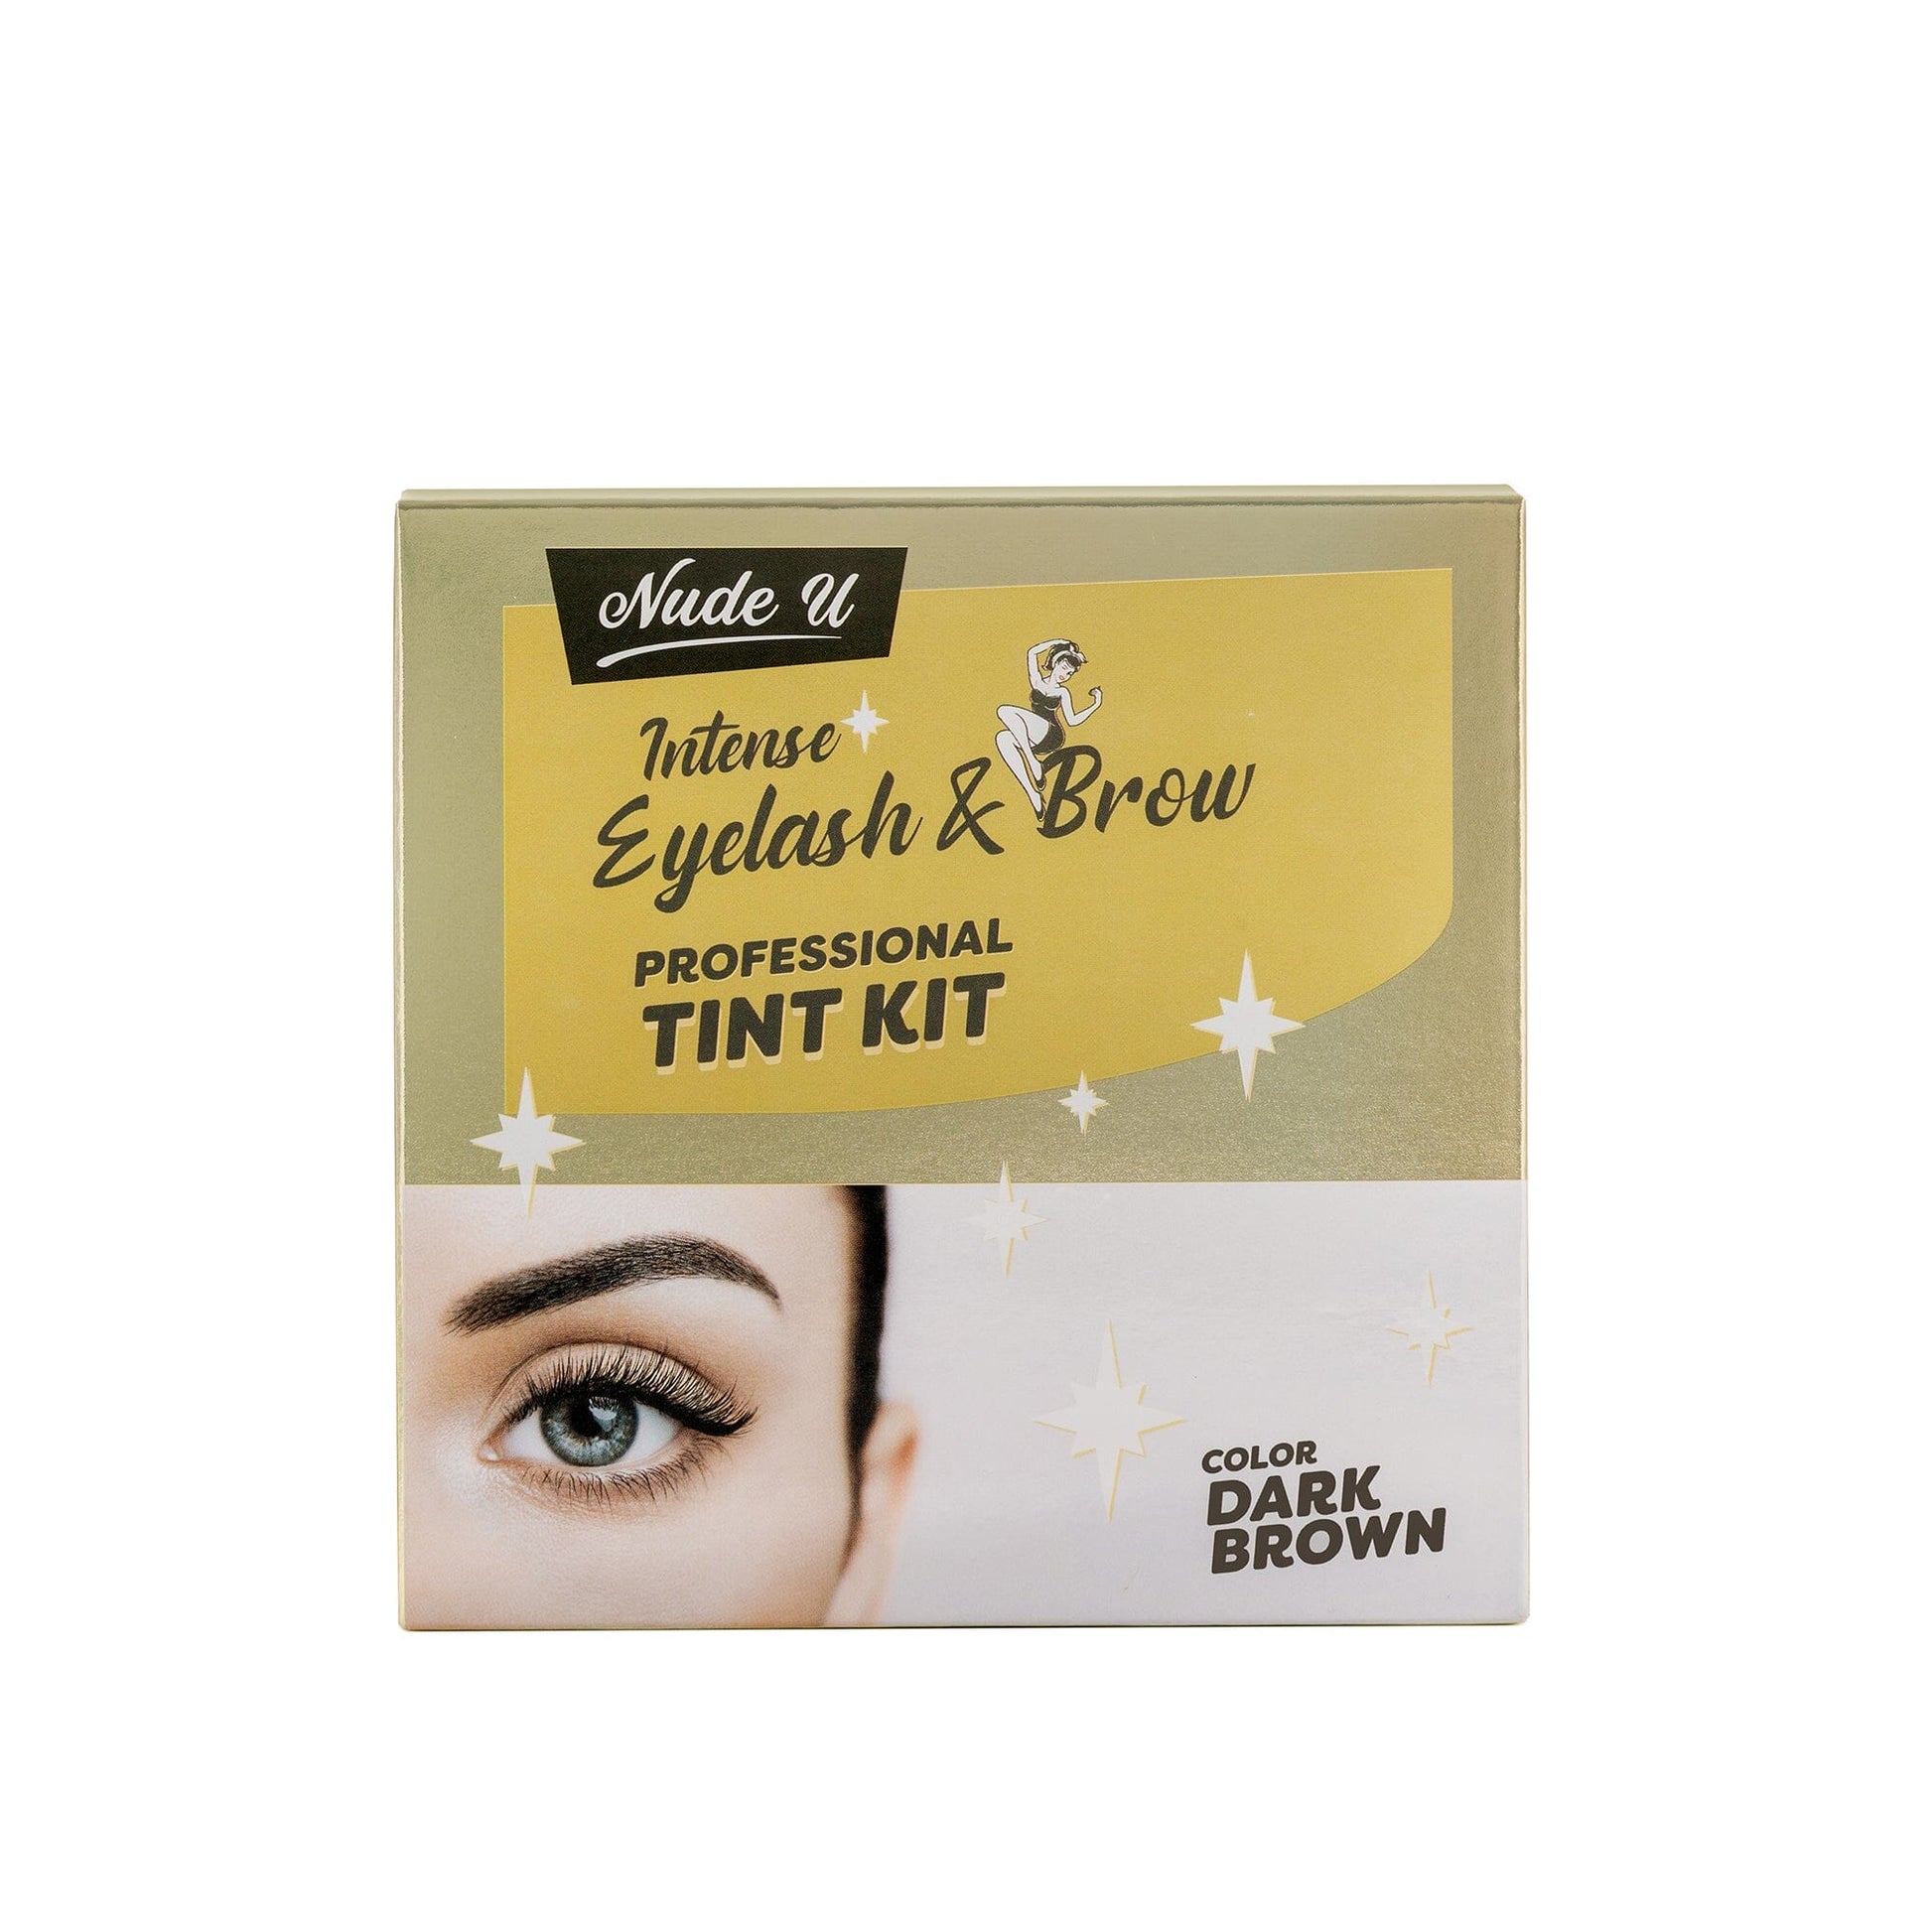 Intense Eyelash & Brow | Dark Brown | Professional Tint Kit | NUDE U SPA NUDE U 